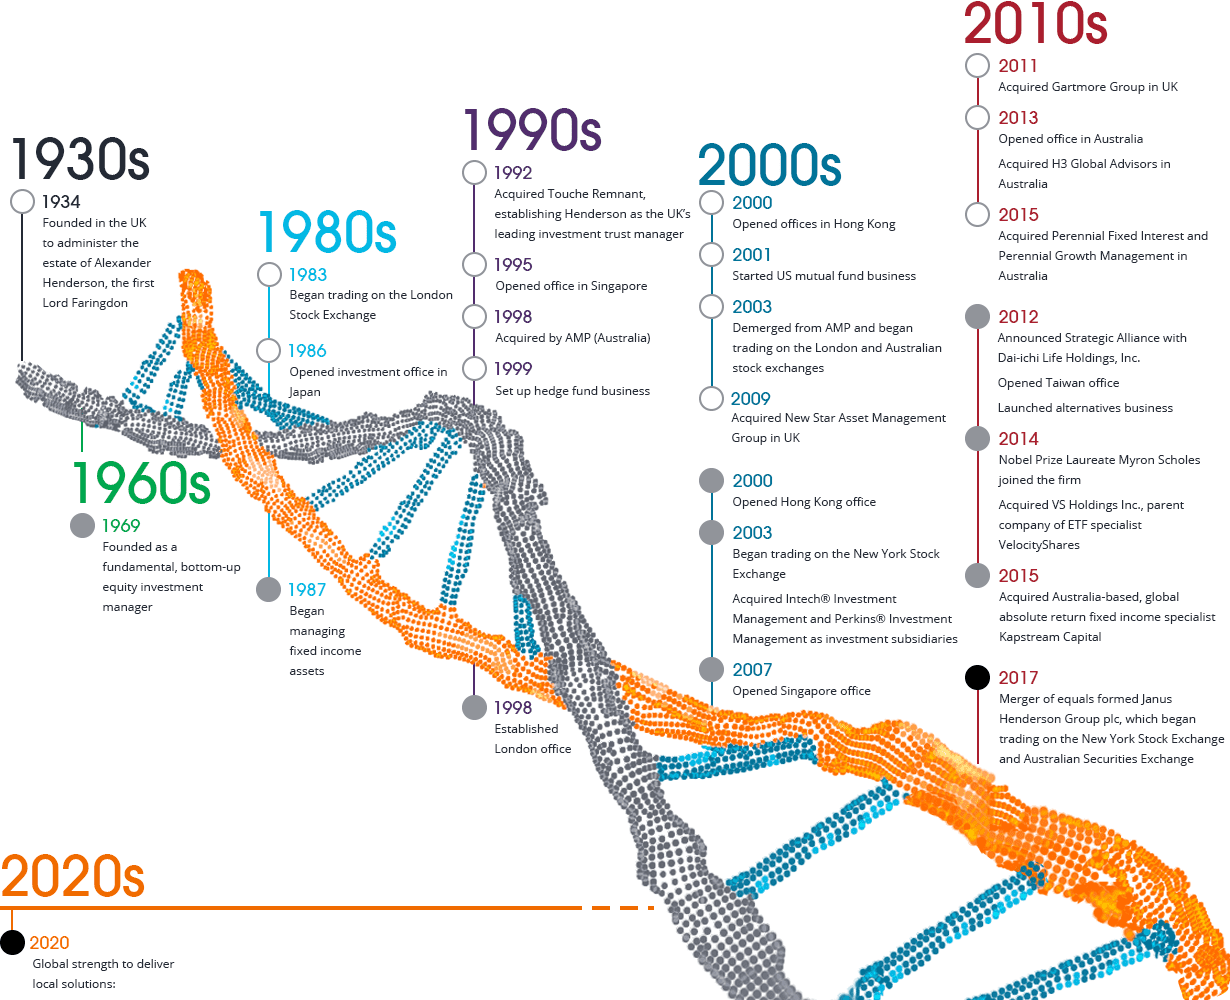 Helix shaped timeline of Janus Henderson